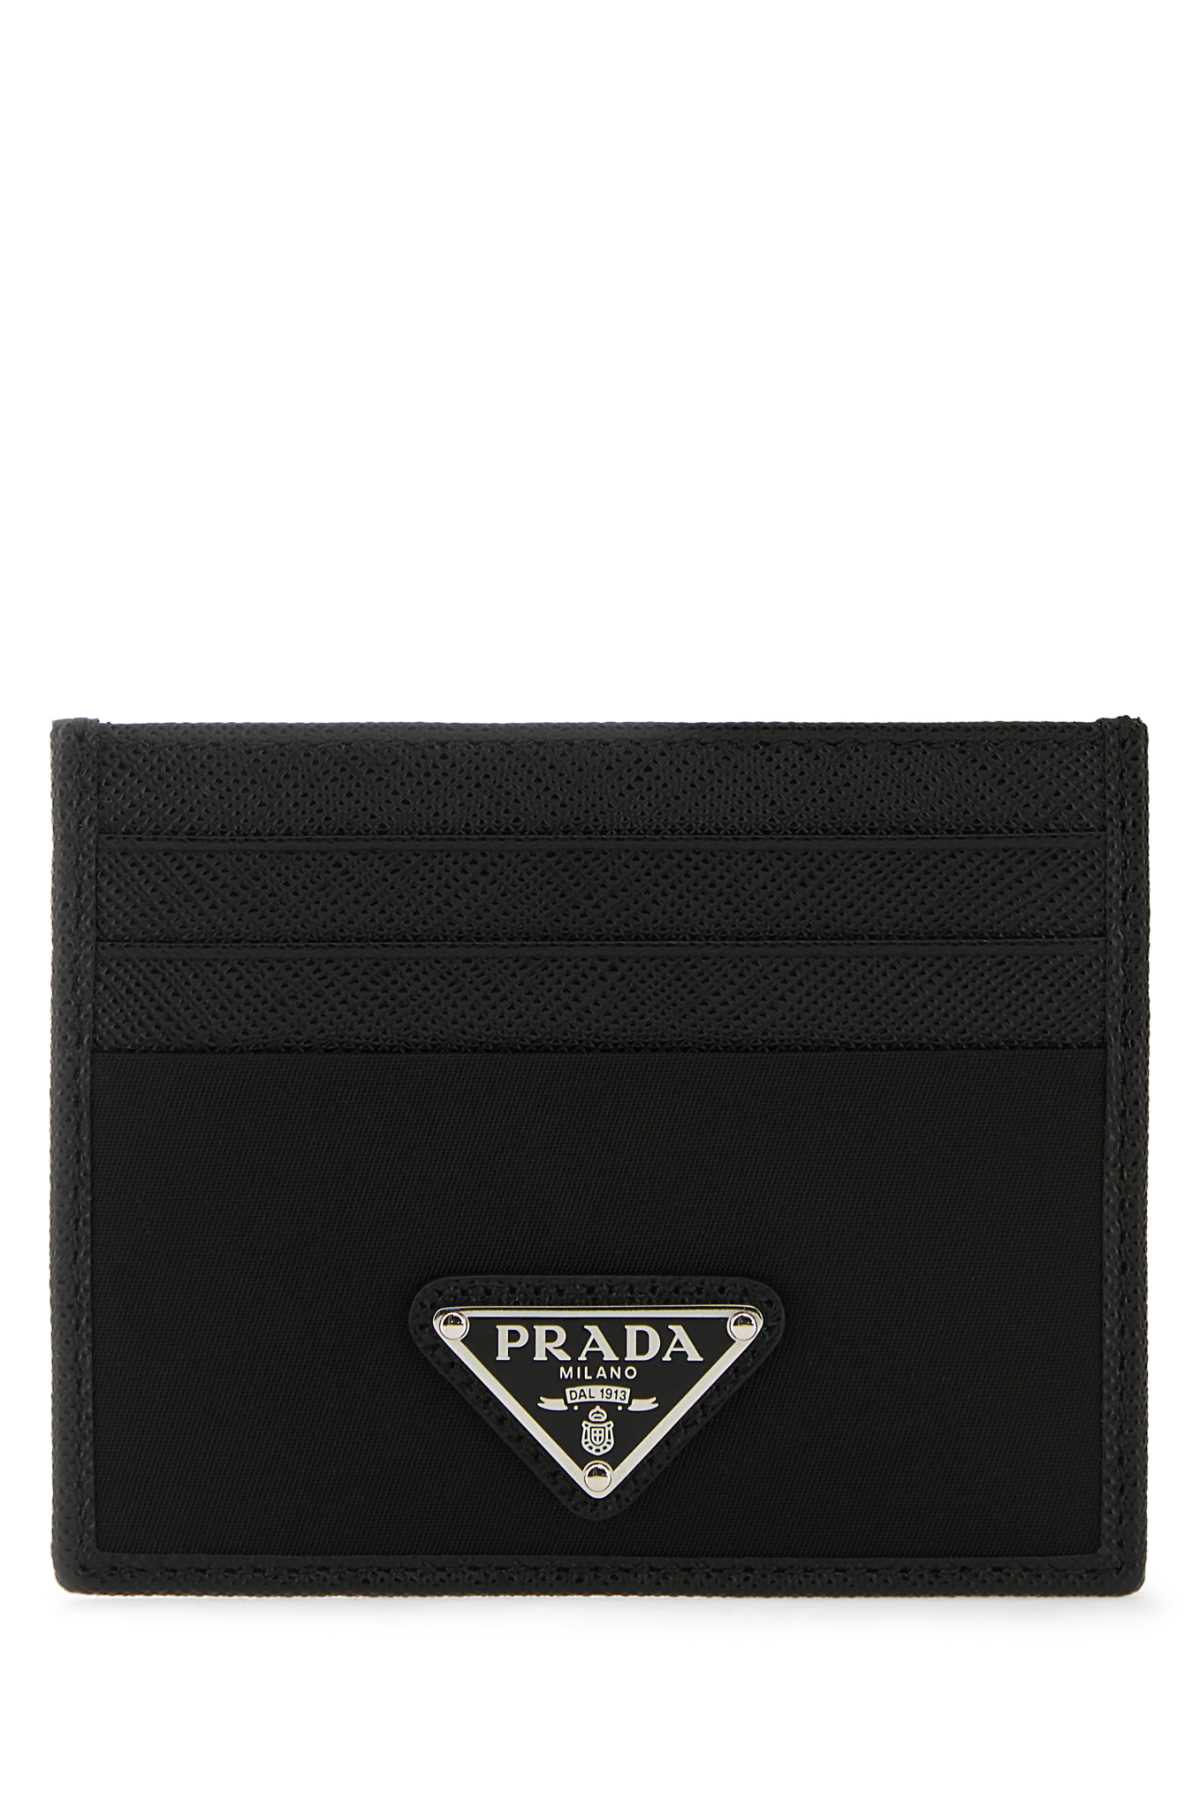 Prada Black Leather And Satin Card Holder In Nero